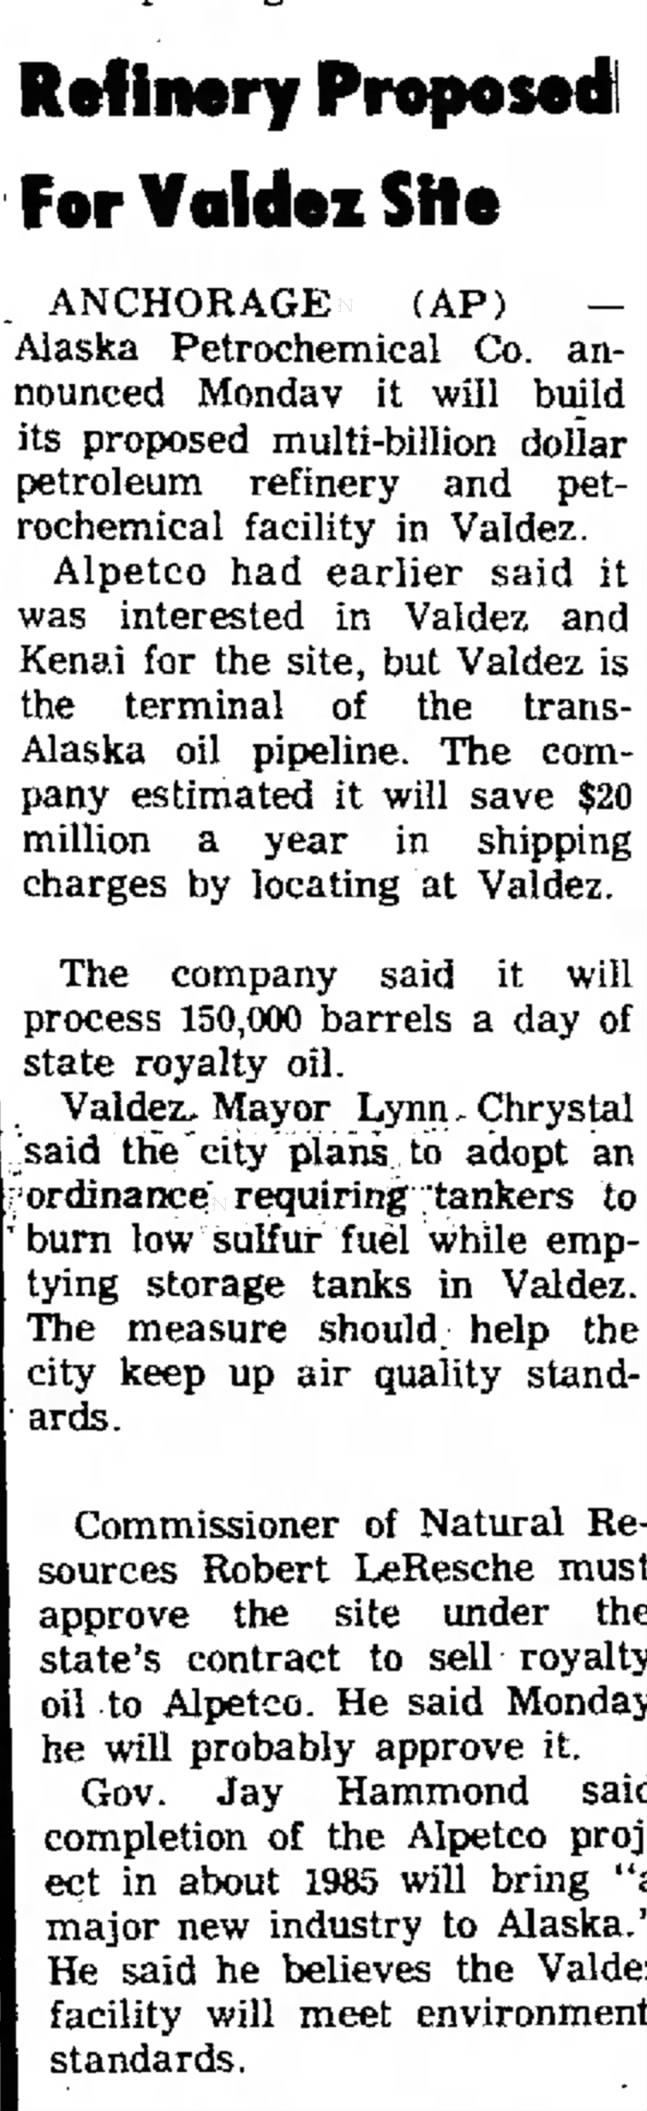 Refinery proposed for Valdez site, 21 November 1978